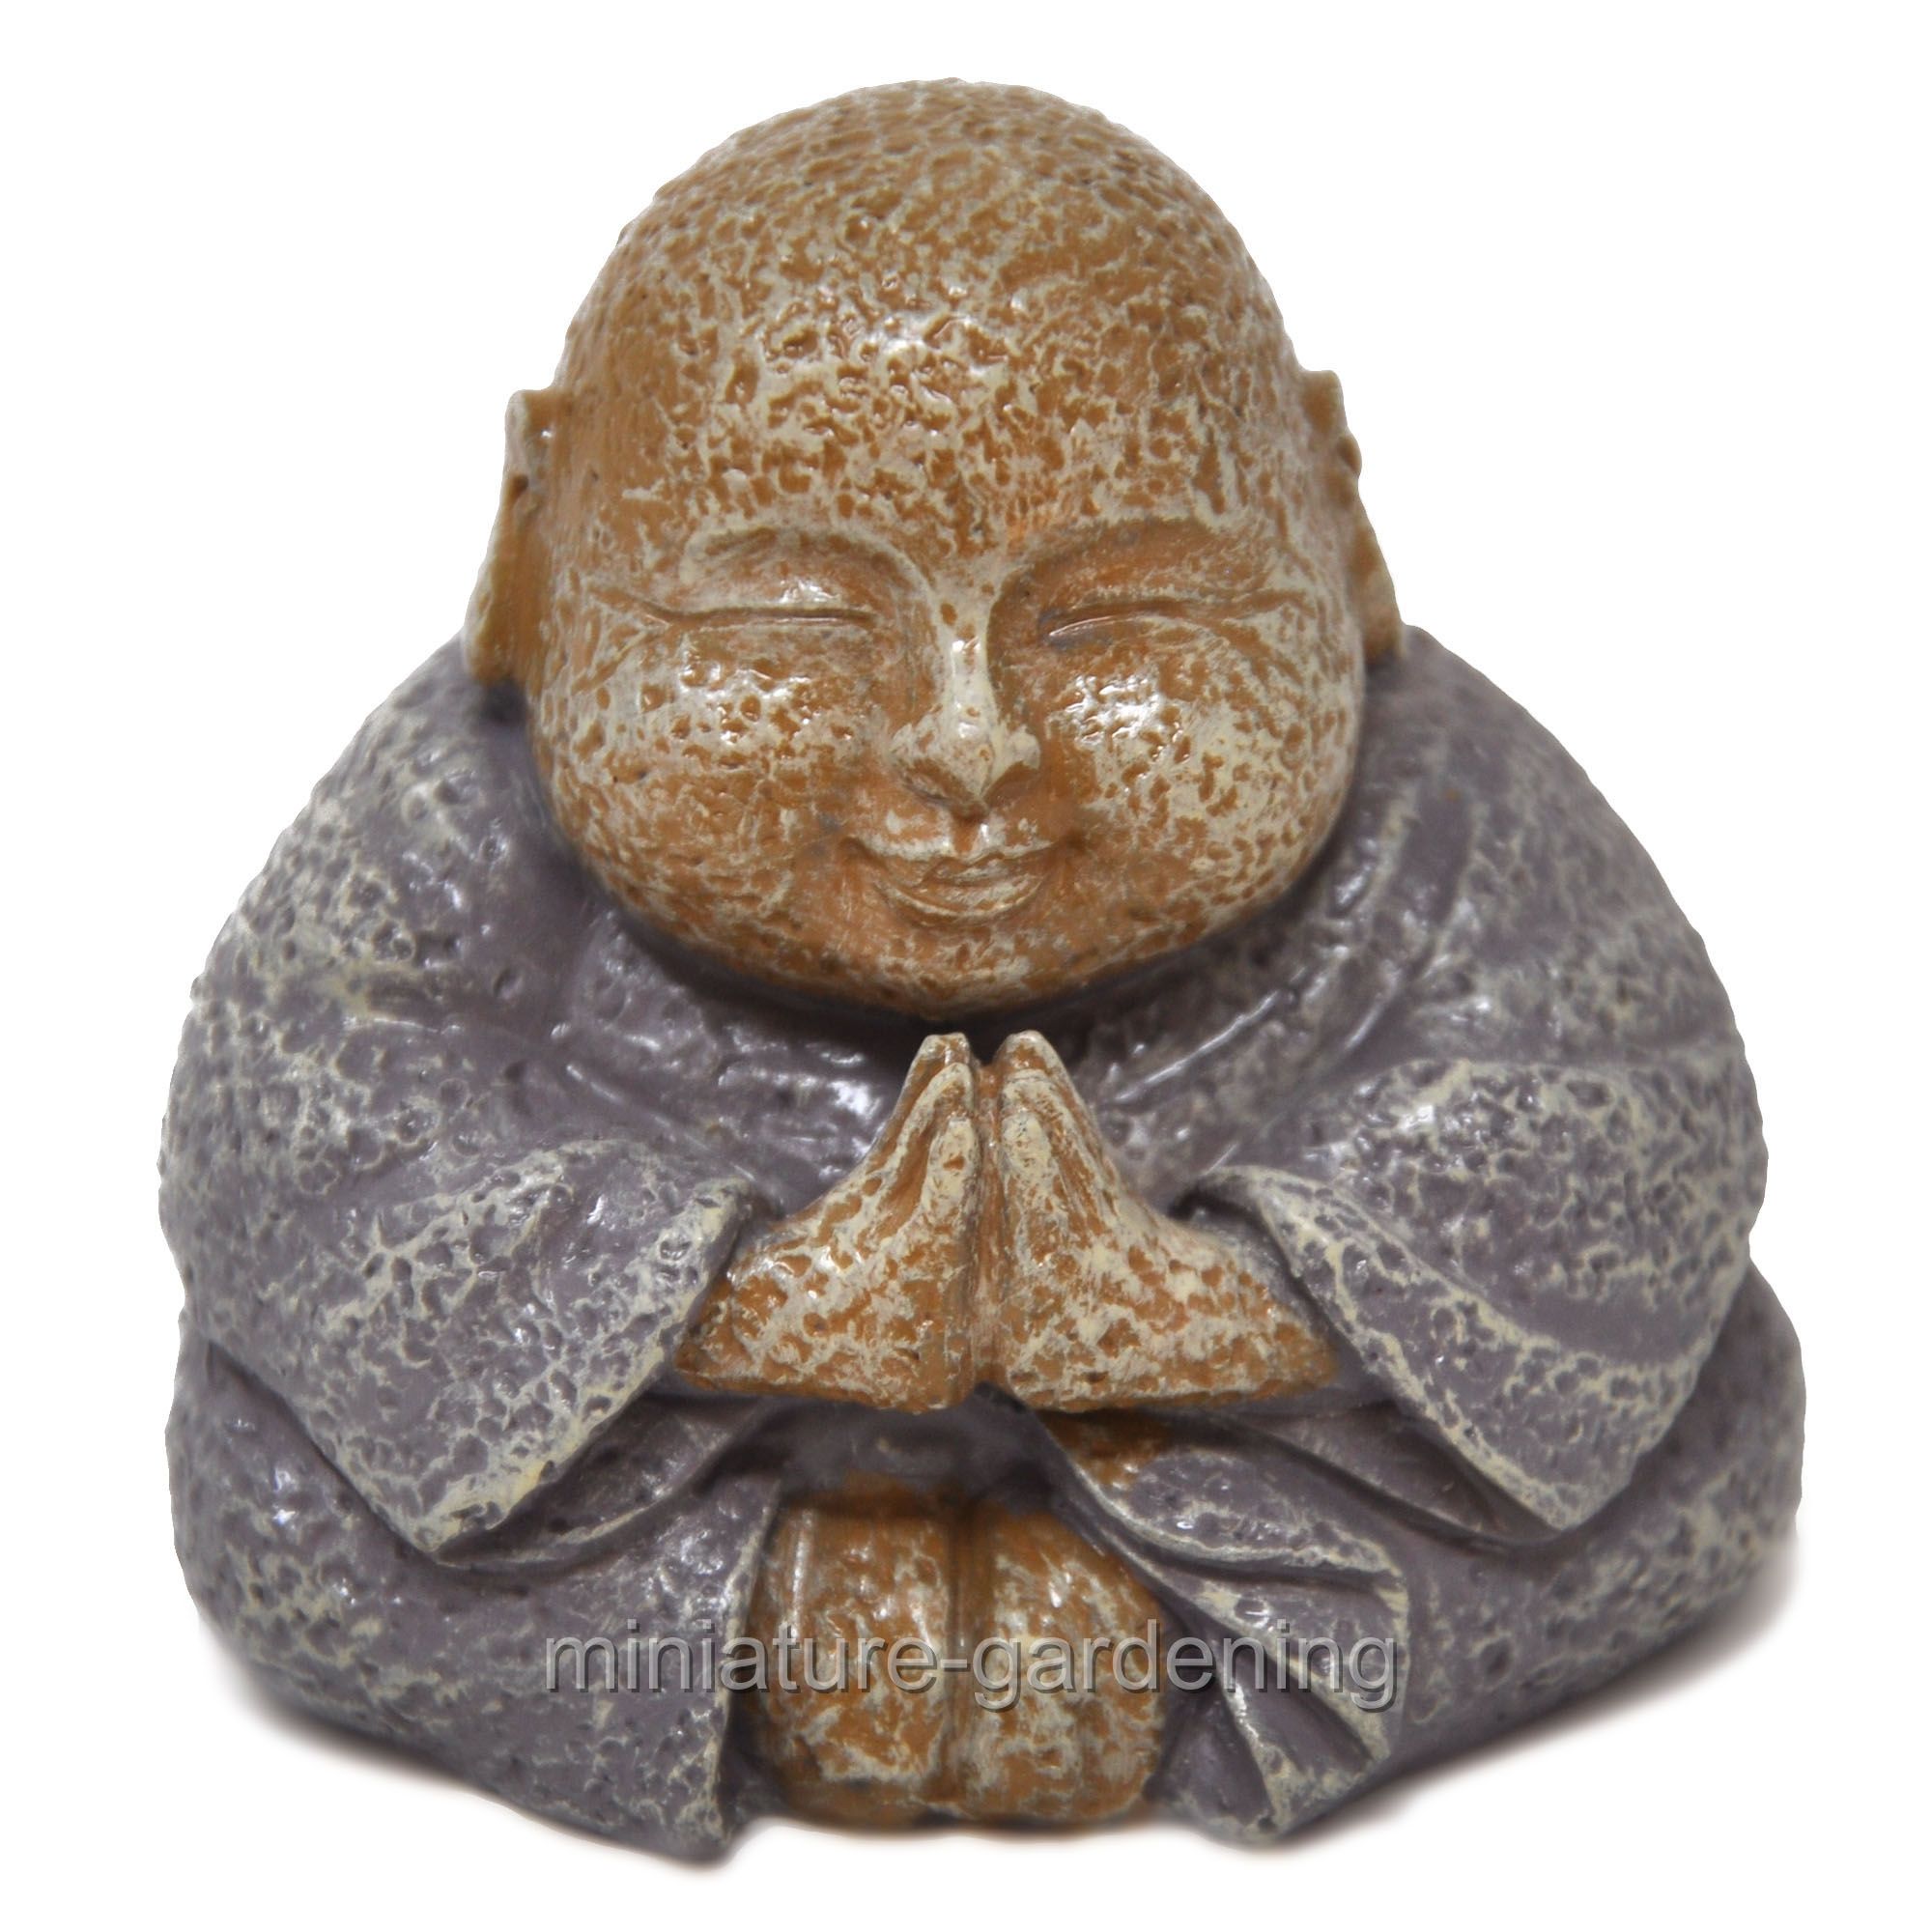 Miniature Smiling Buddha for Miniature Garden, Fairy Garden - image 2 of 2